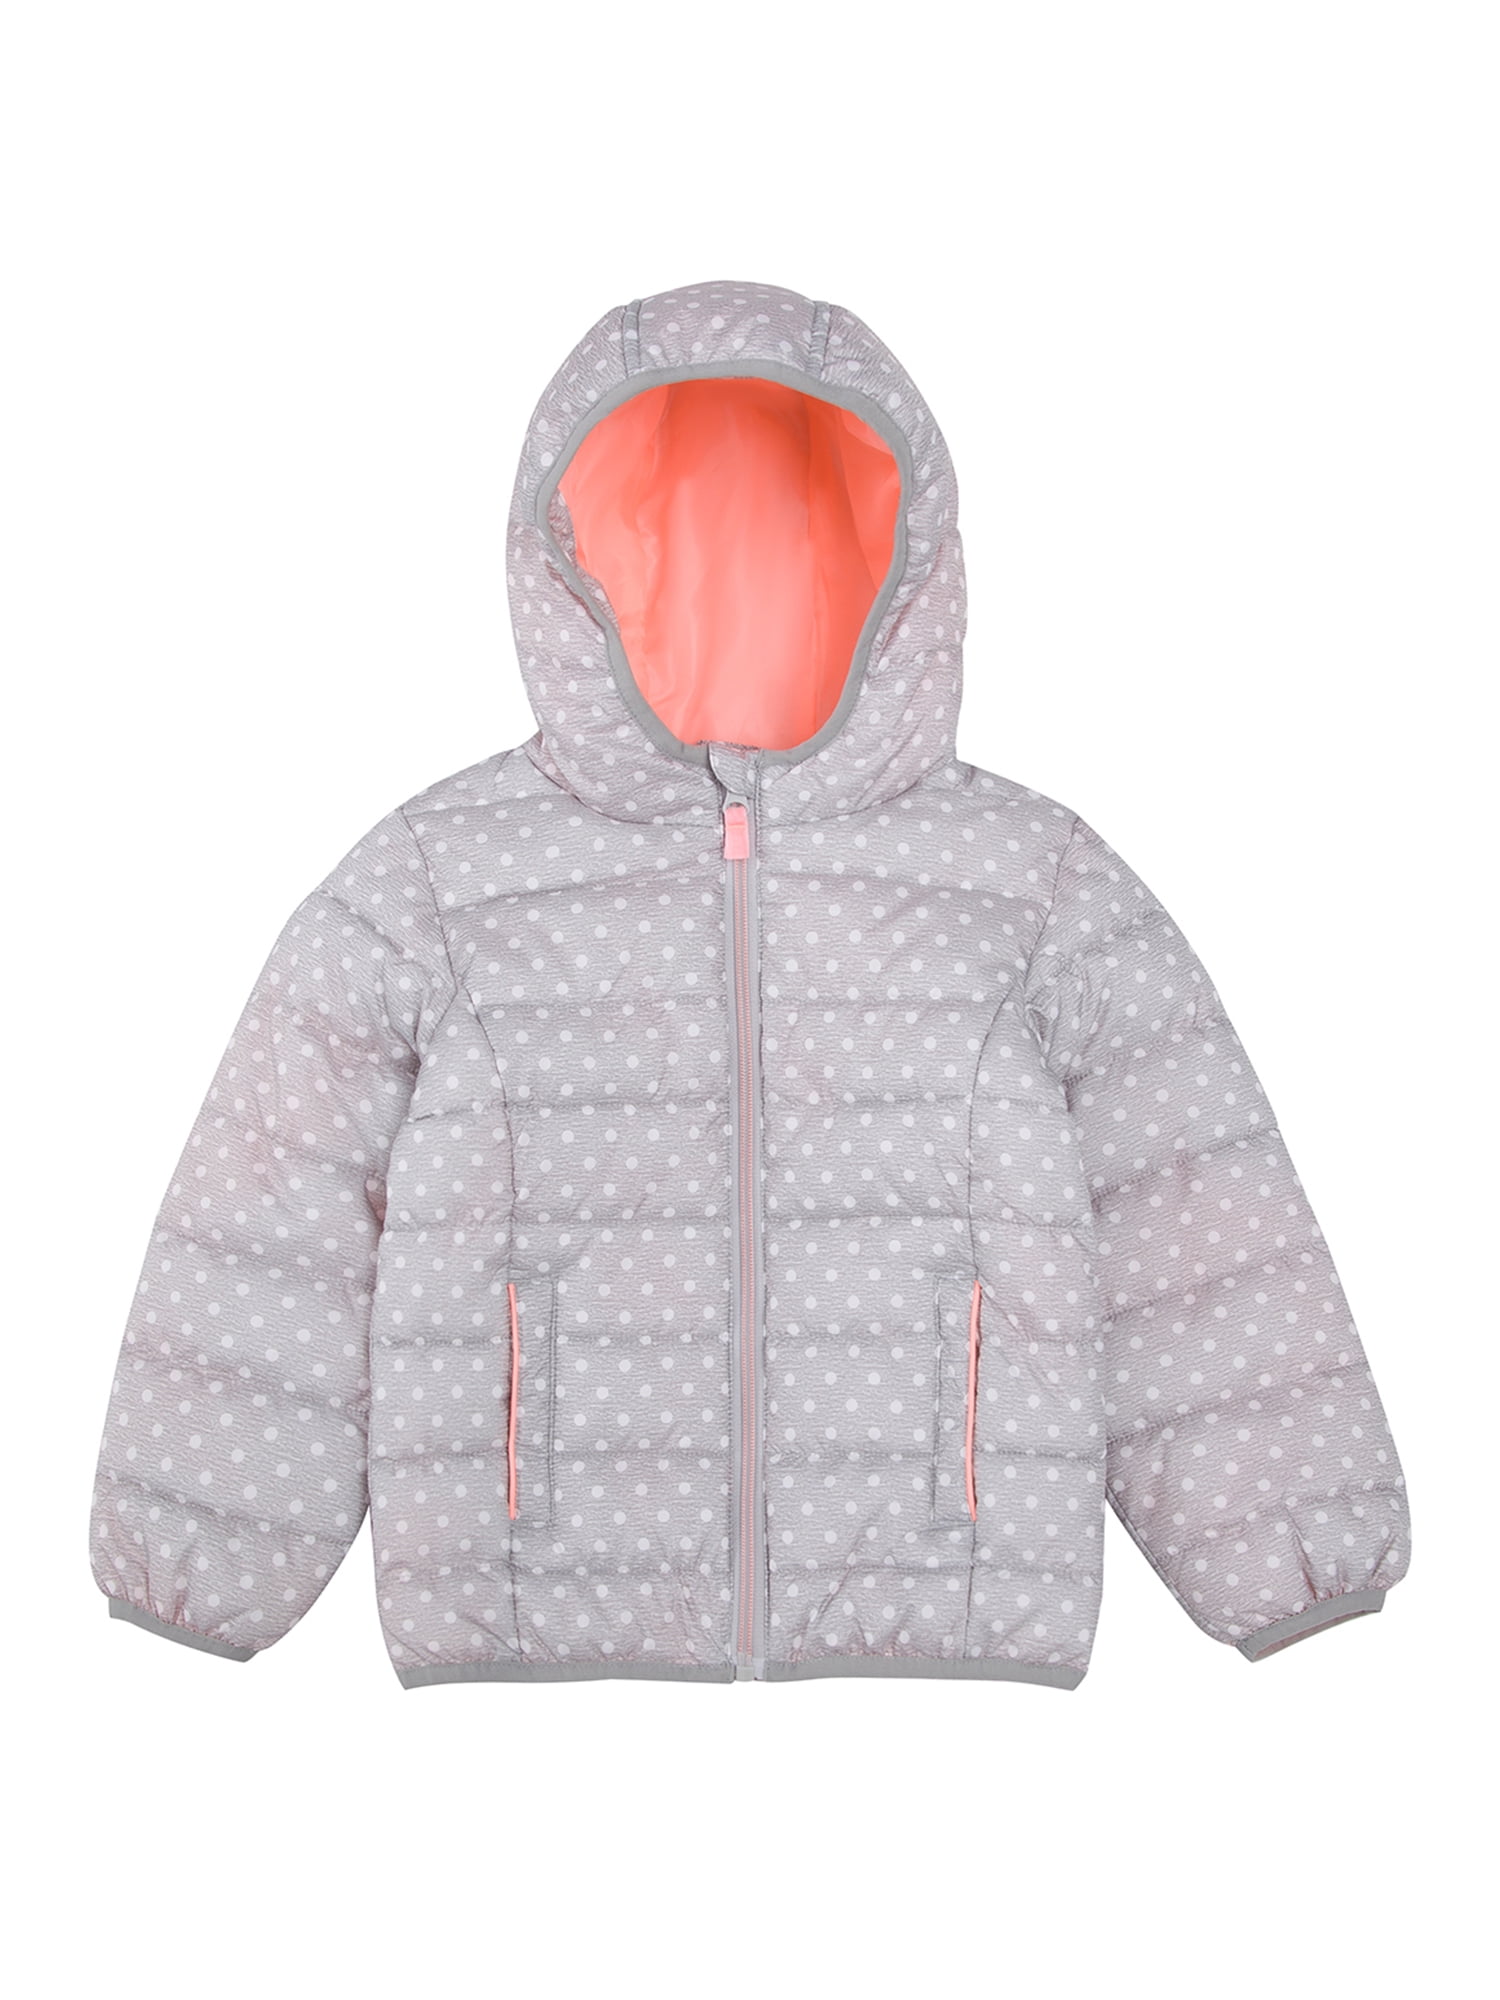 Rokka&Rolla Baby Girls' Light Puffer Jacket Toddler Winter Coat, Sizes 18M-4T